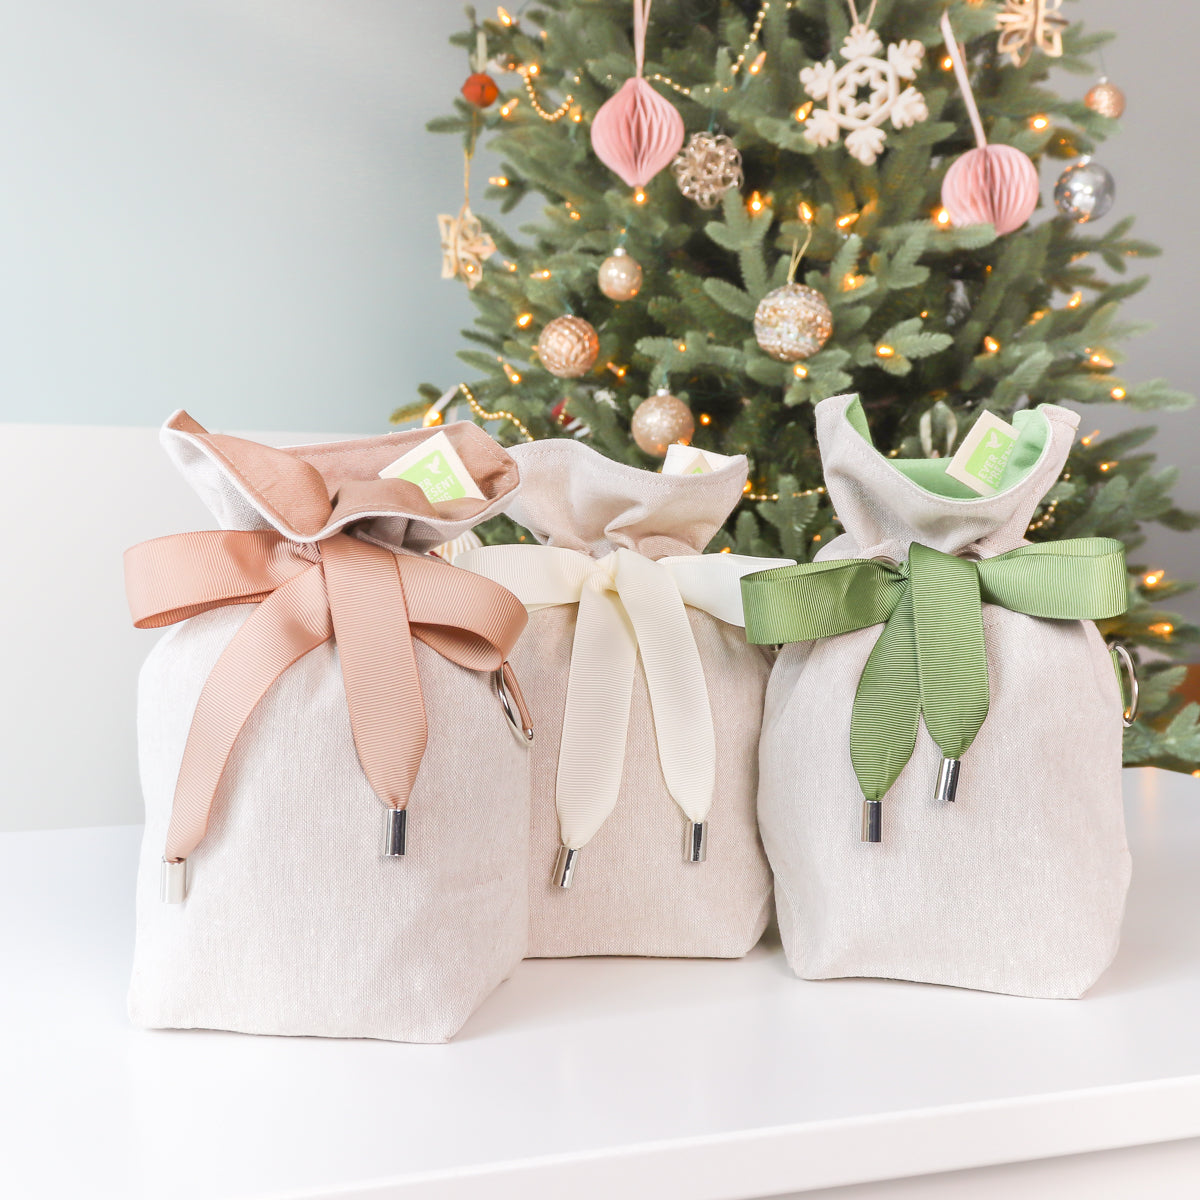 LOT (36) New Colorifics Holiday Christmas Gift Bag Bags 13.5